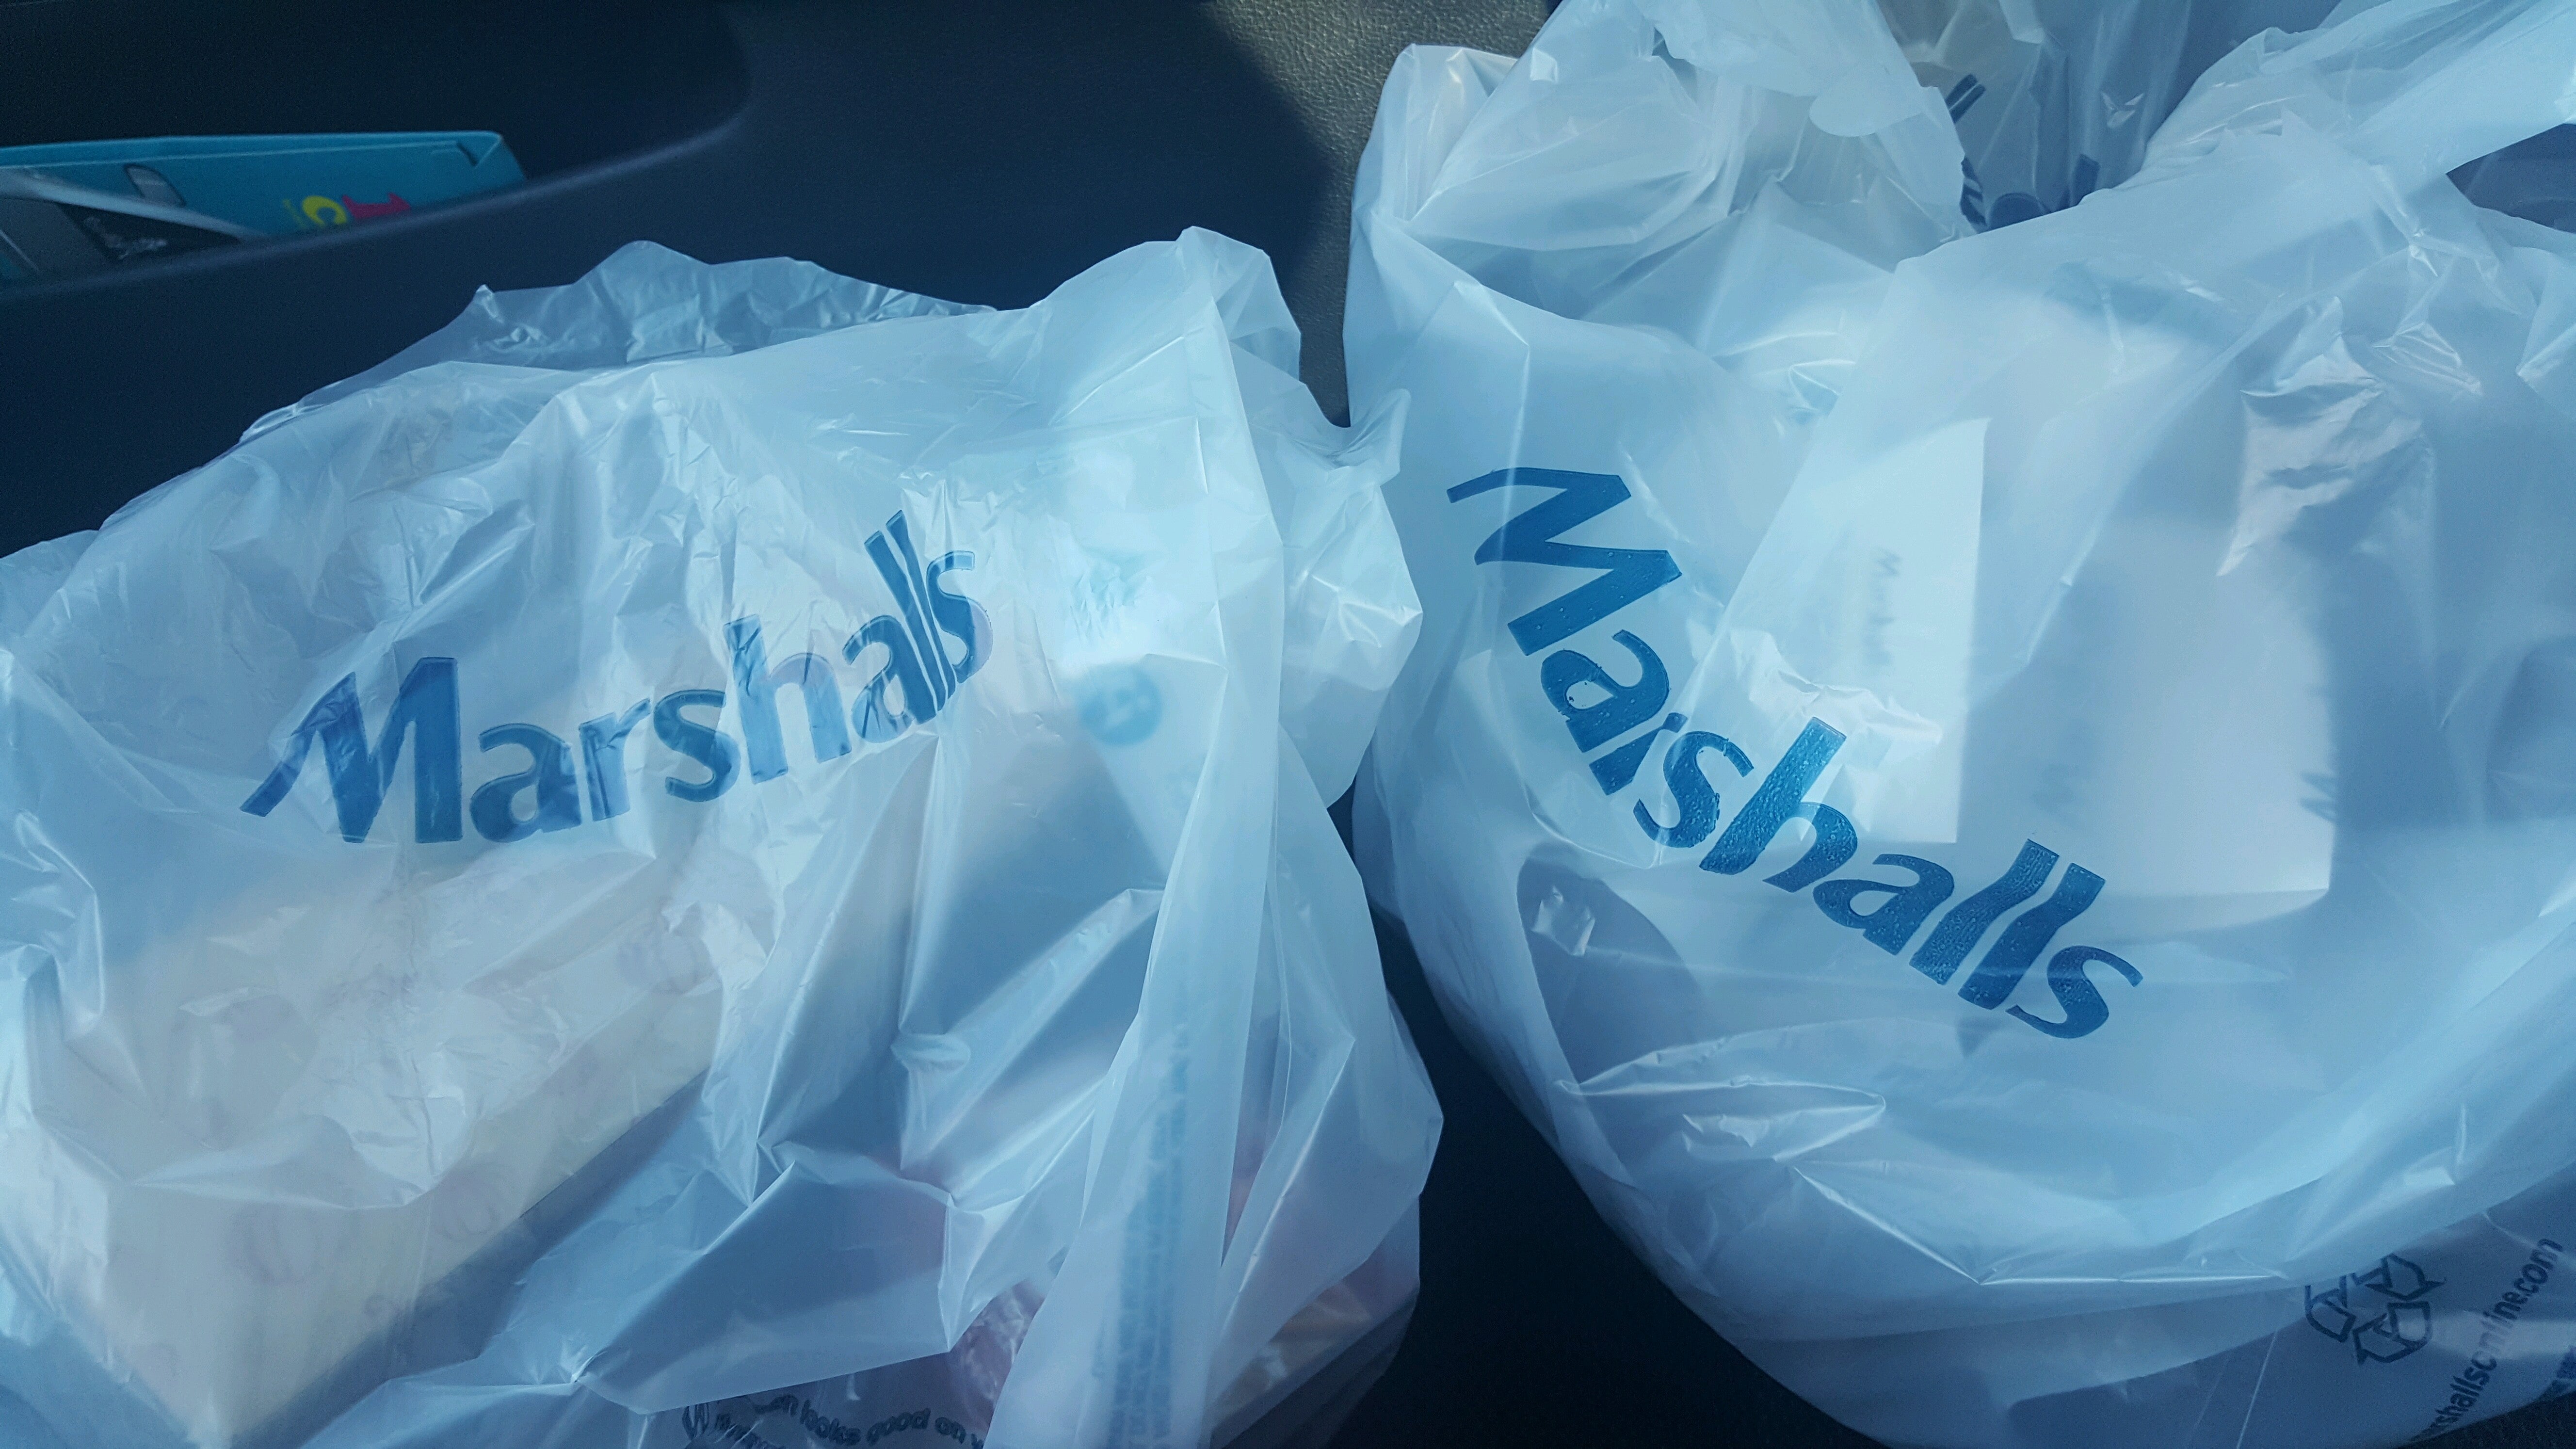 marshalls plastic bags